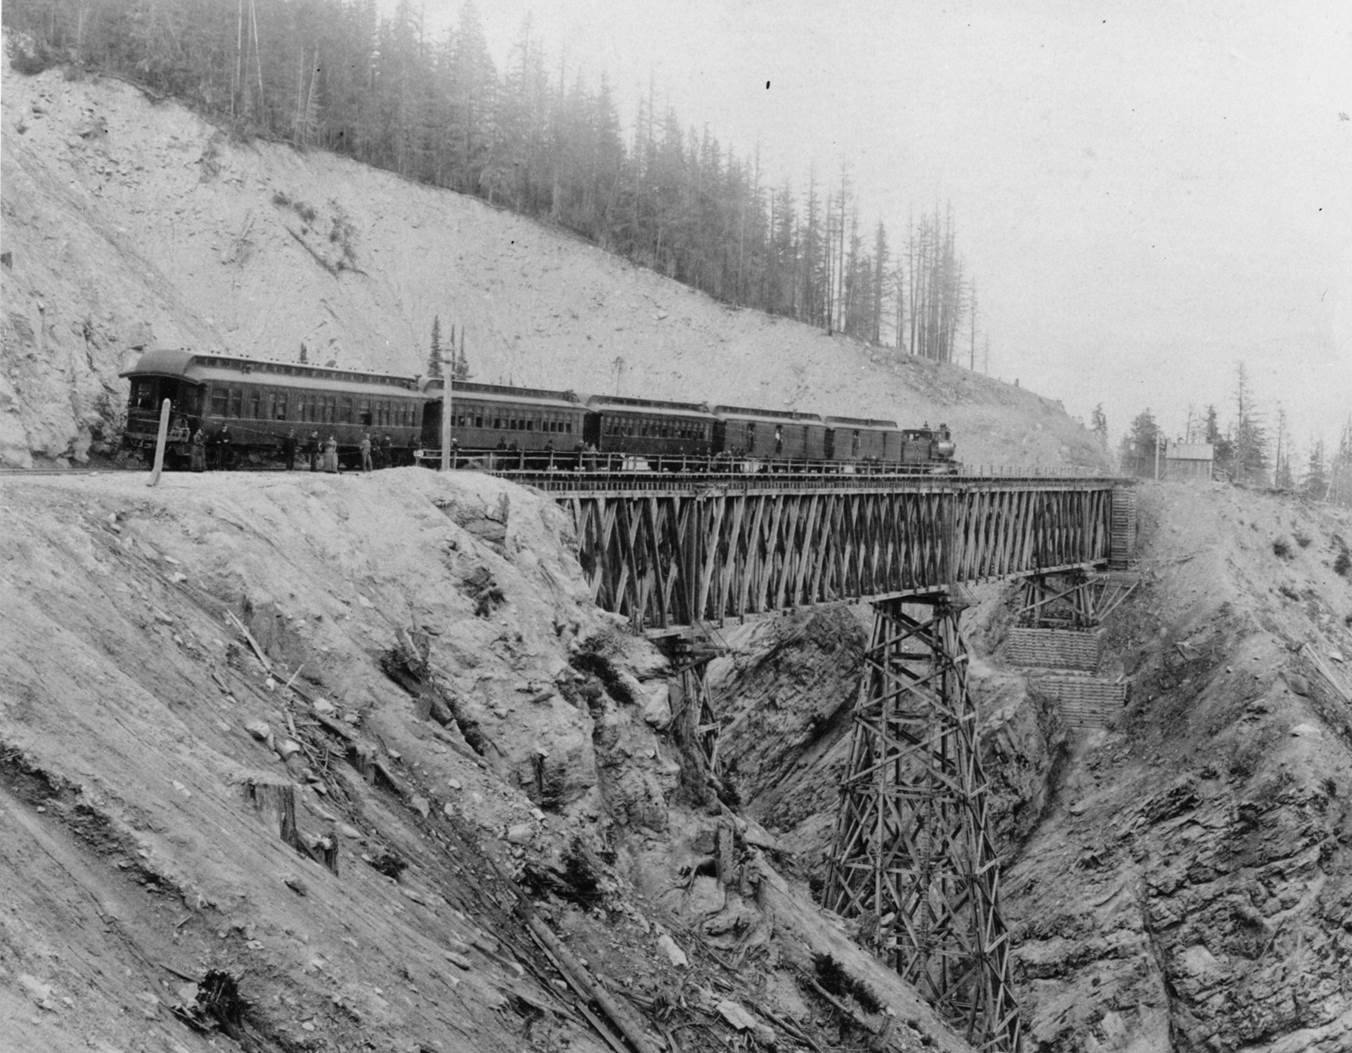 A passenger train crosses Stony Creek Bridge in the Rocky Mountains in 1878. Railroads were importan